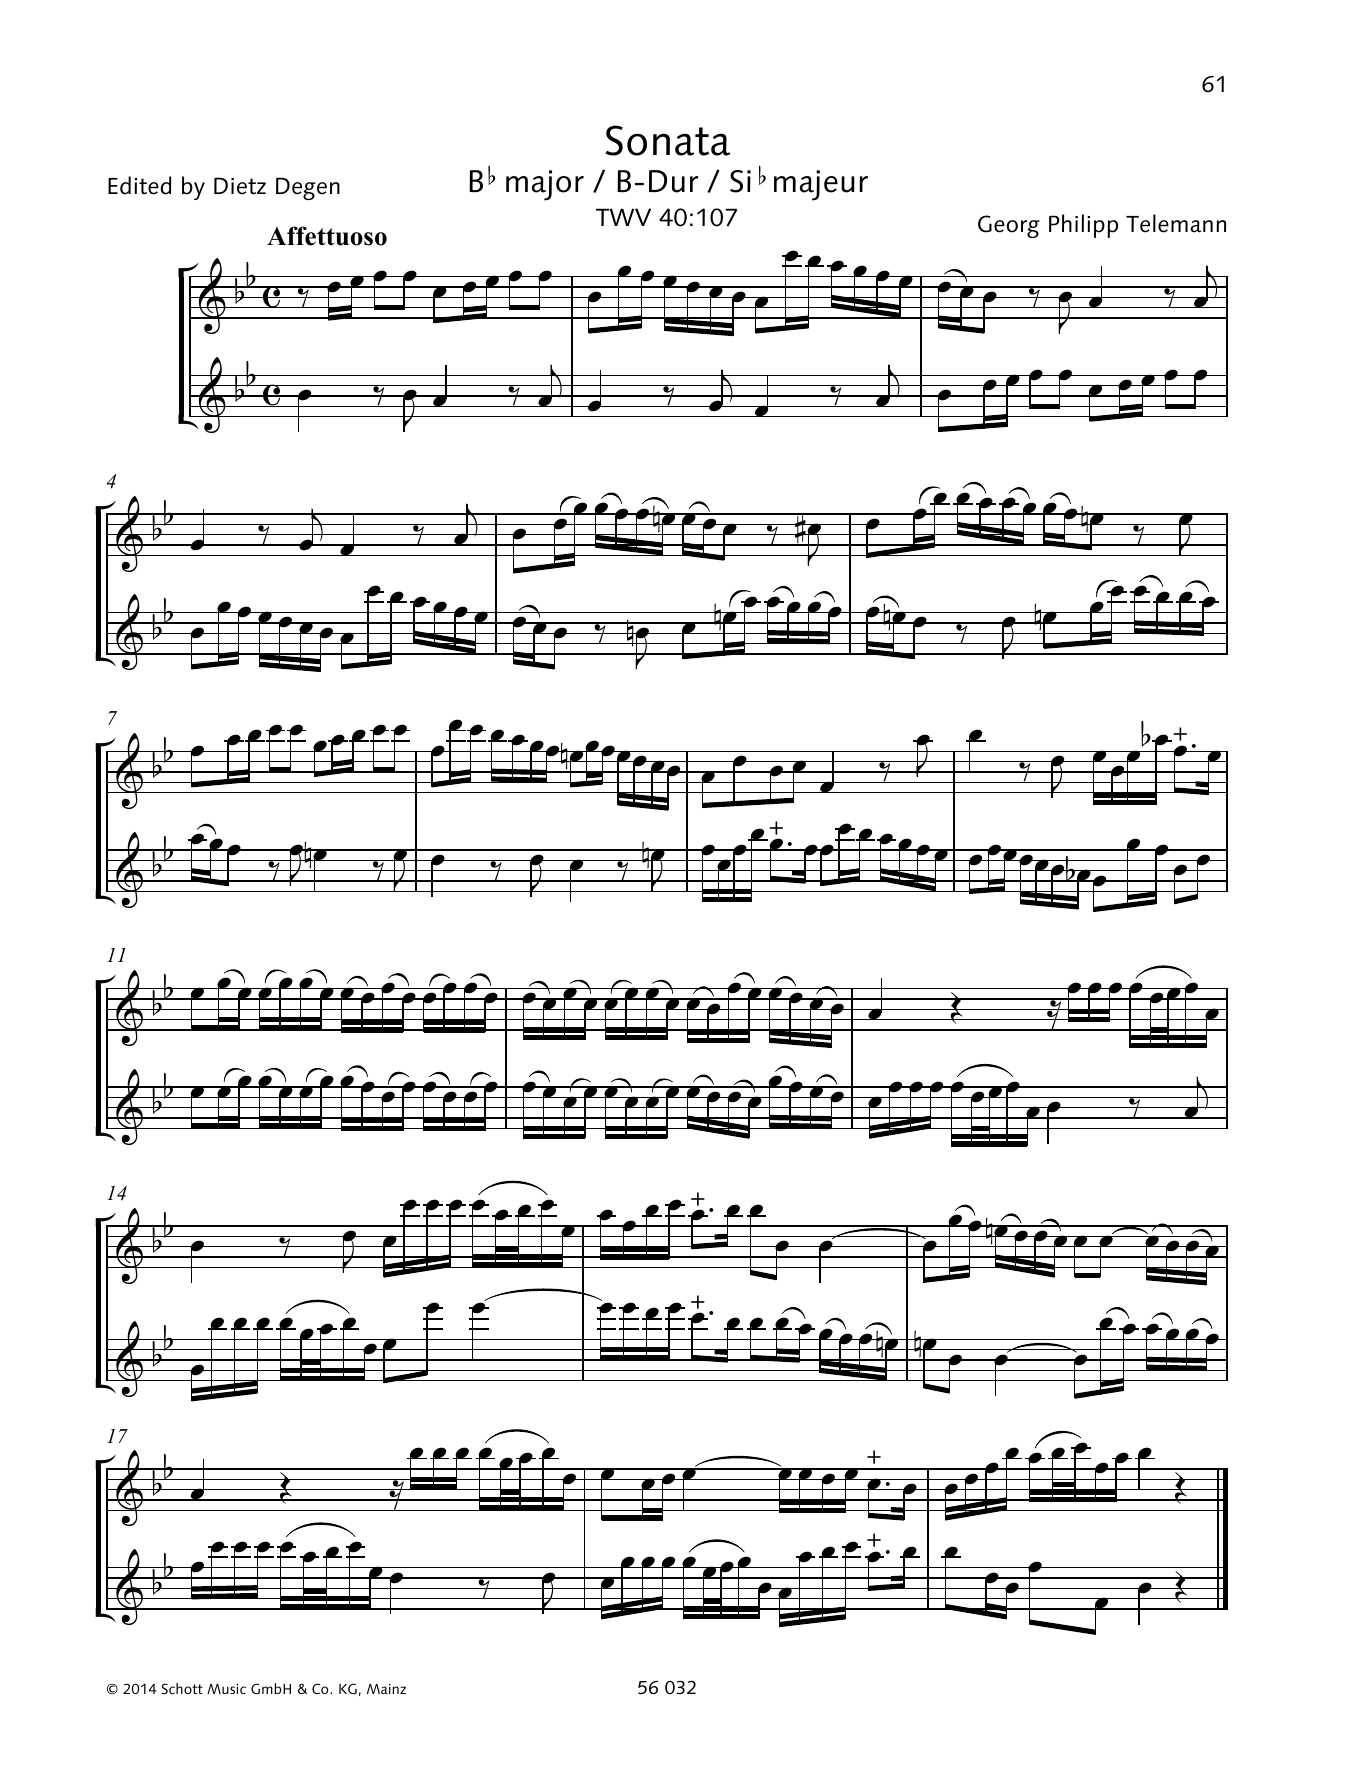 Sonata B-flat major sheet music